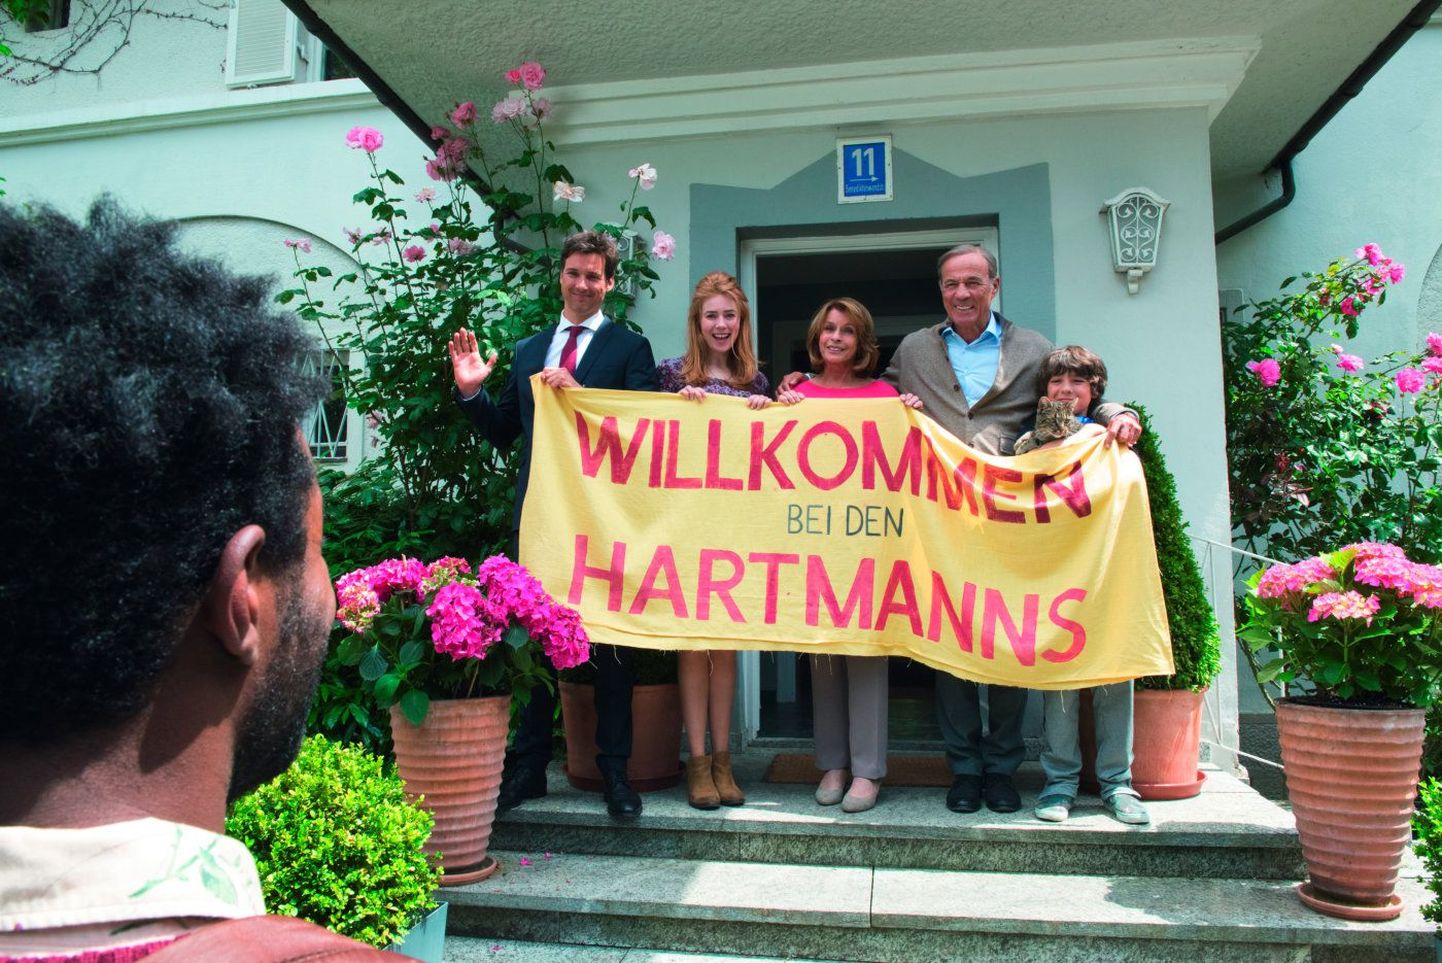 Tere tulemast Hartmannide juurde!